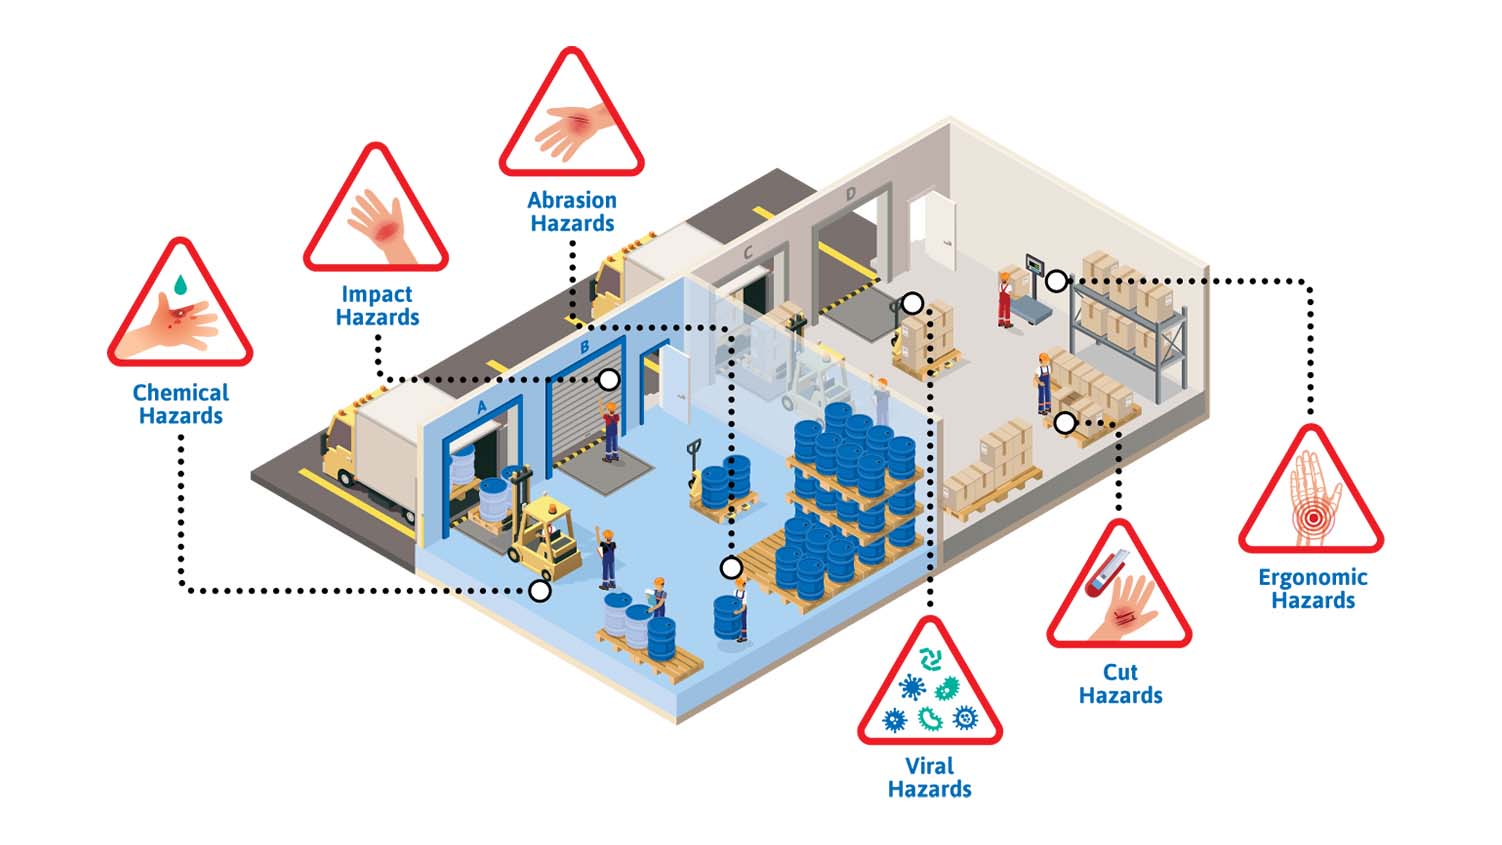 diagram showing 6 types of warehouse hazards: chemicals, impacts, abrasions, viral hazards, cuts, ergonomic hazards